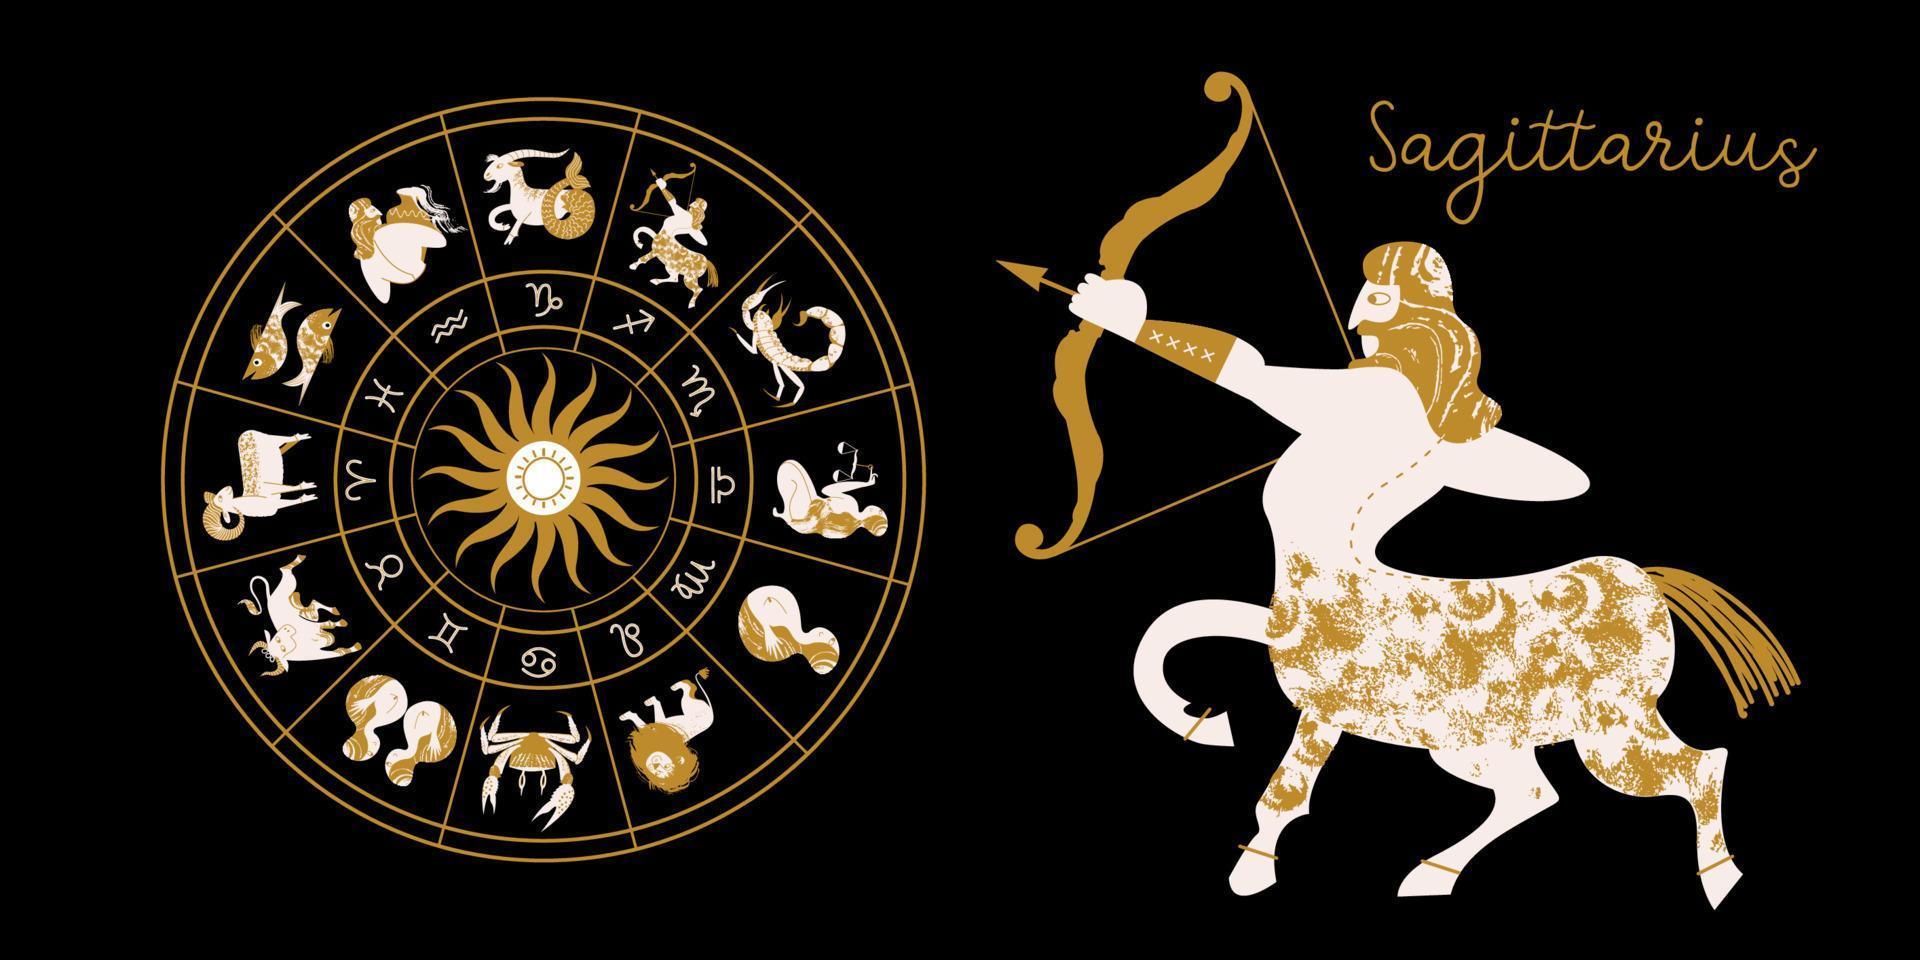 signo do zodíaco sagitário. horóscopo e astrologia. horóscopo completo no círculo. zodíaco de roda de horóscopo com vetor de doze signos.